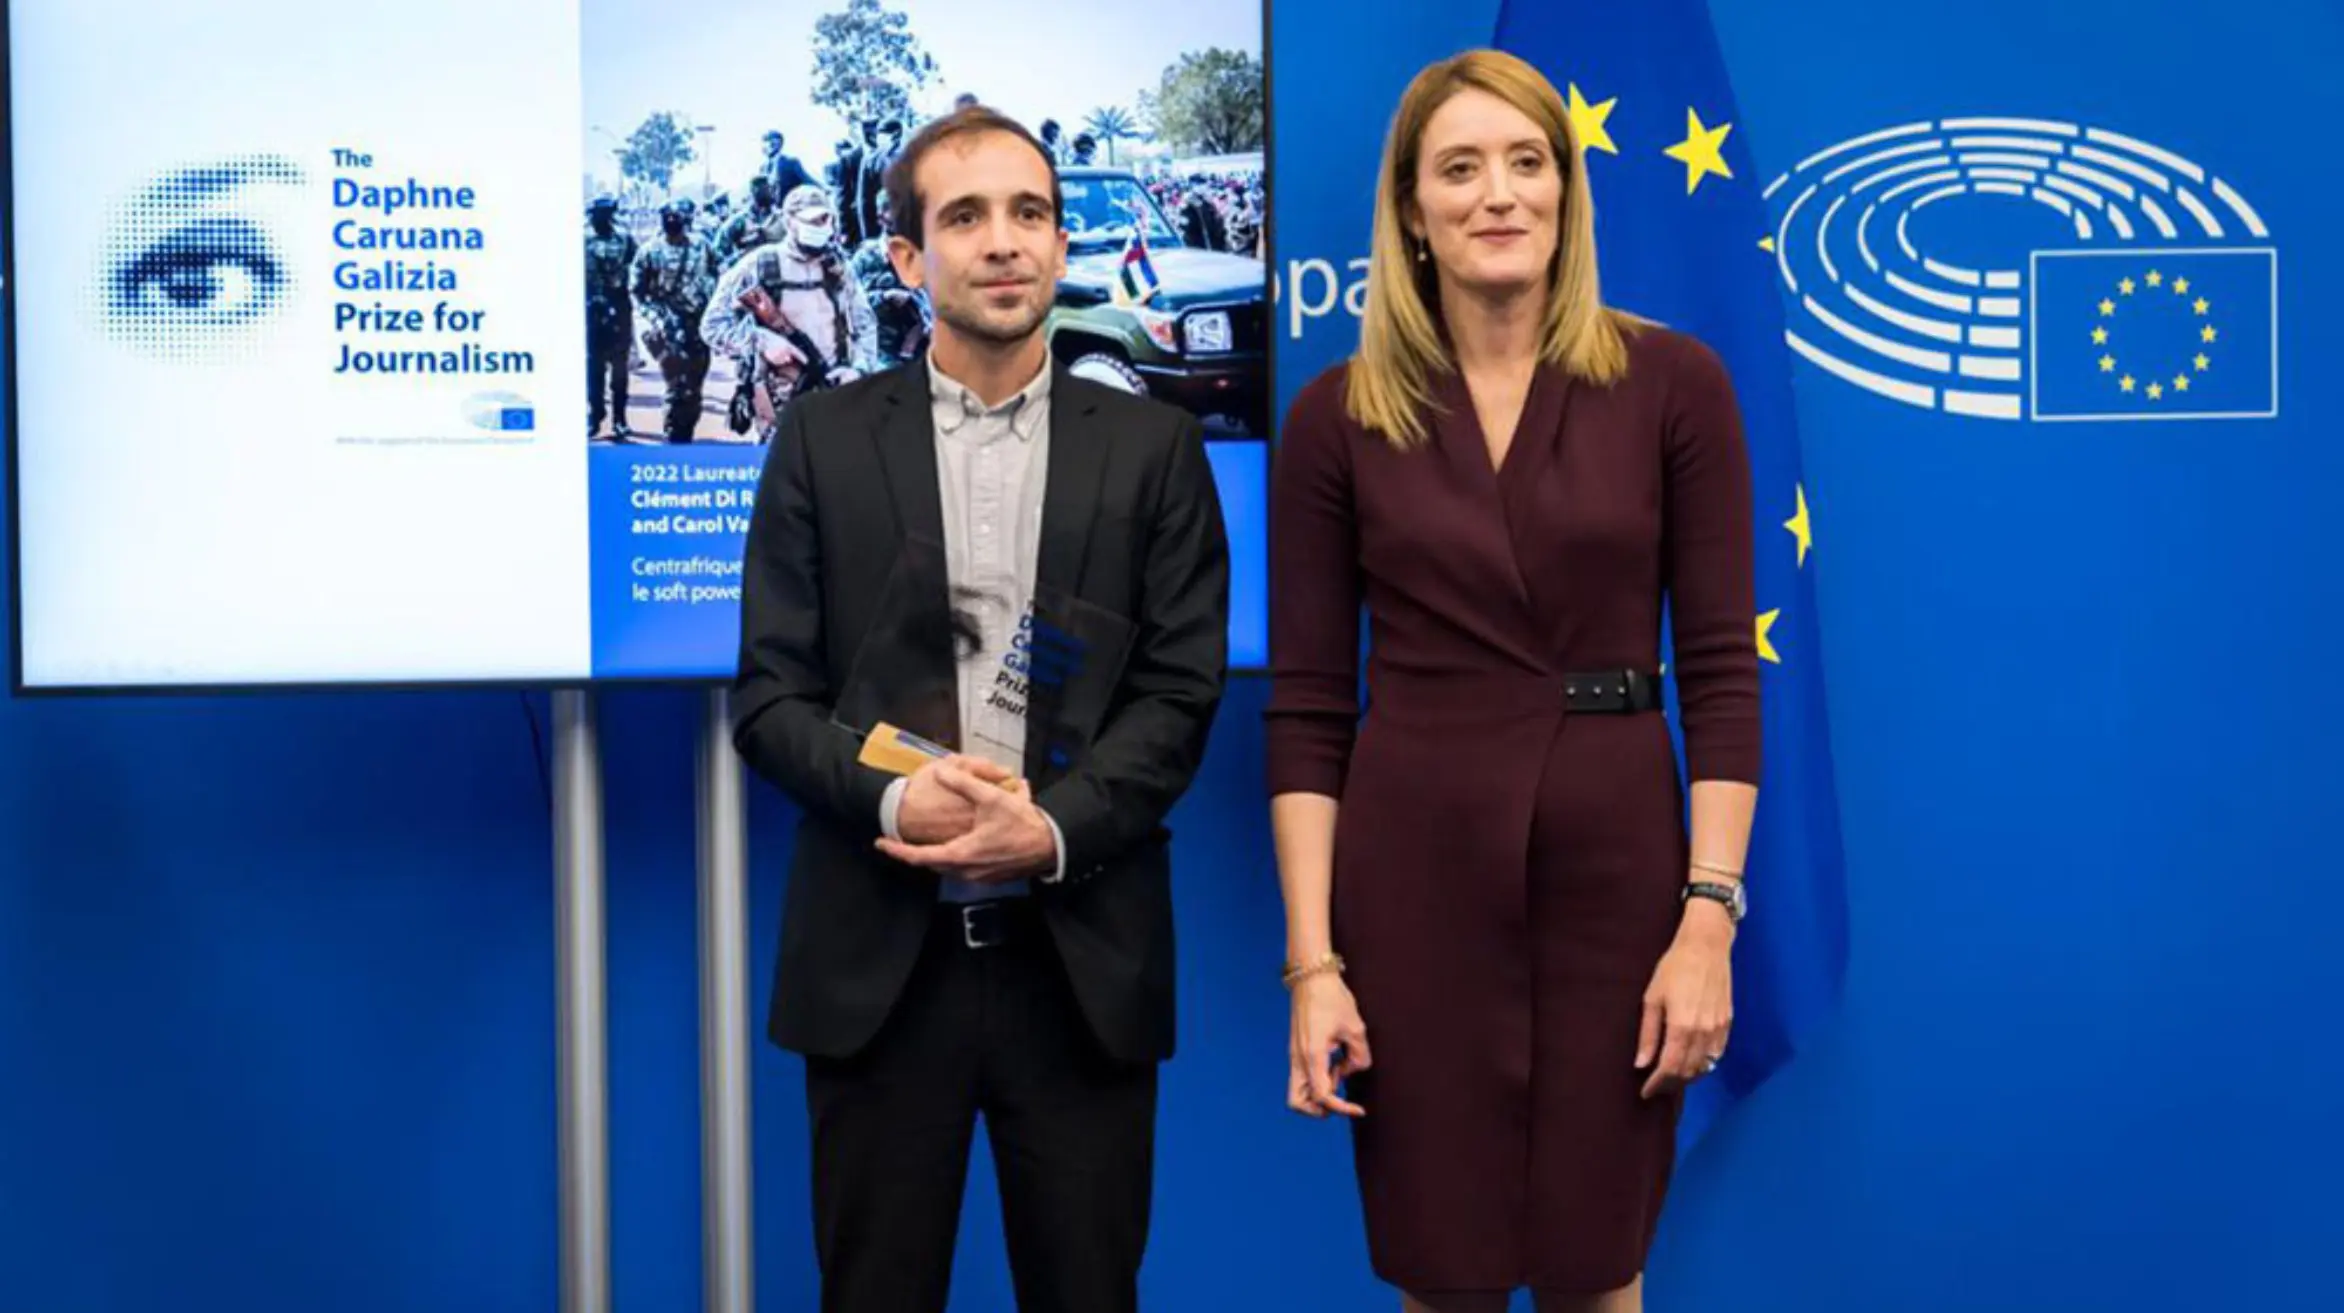 EU Parliament Launches Daphne Caruana Galizia Prize for Journalism